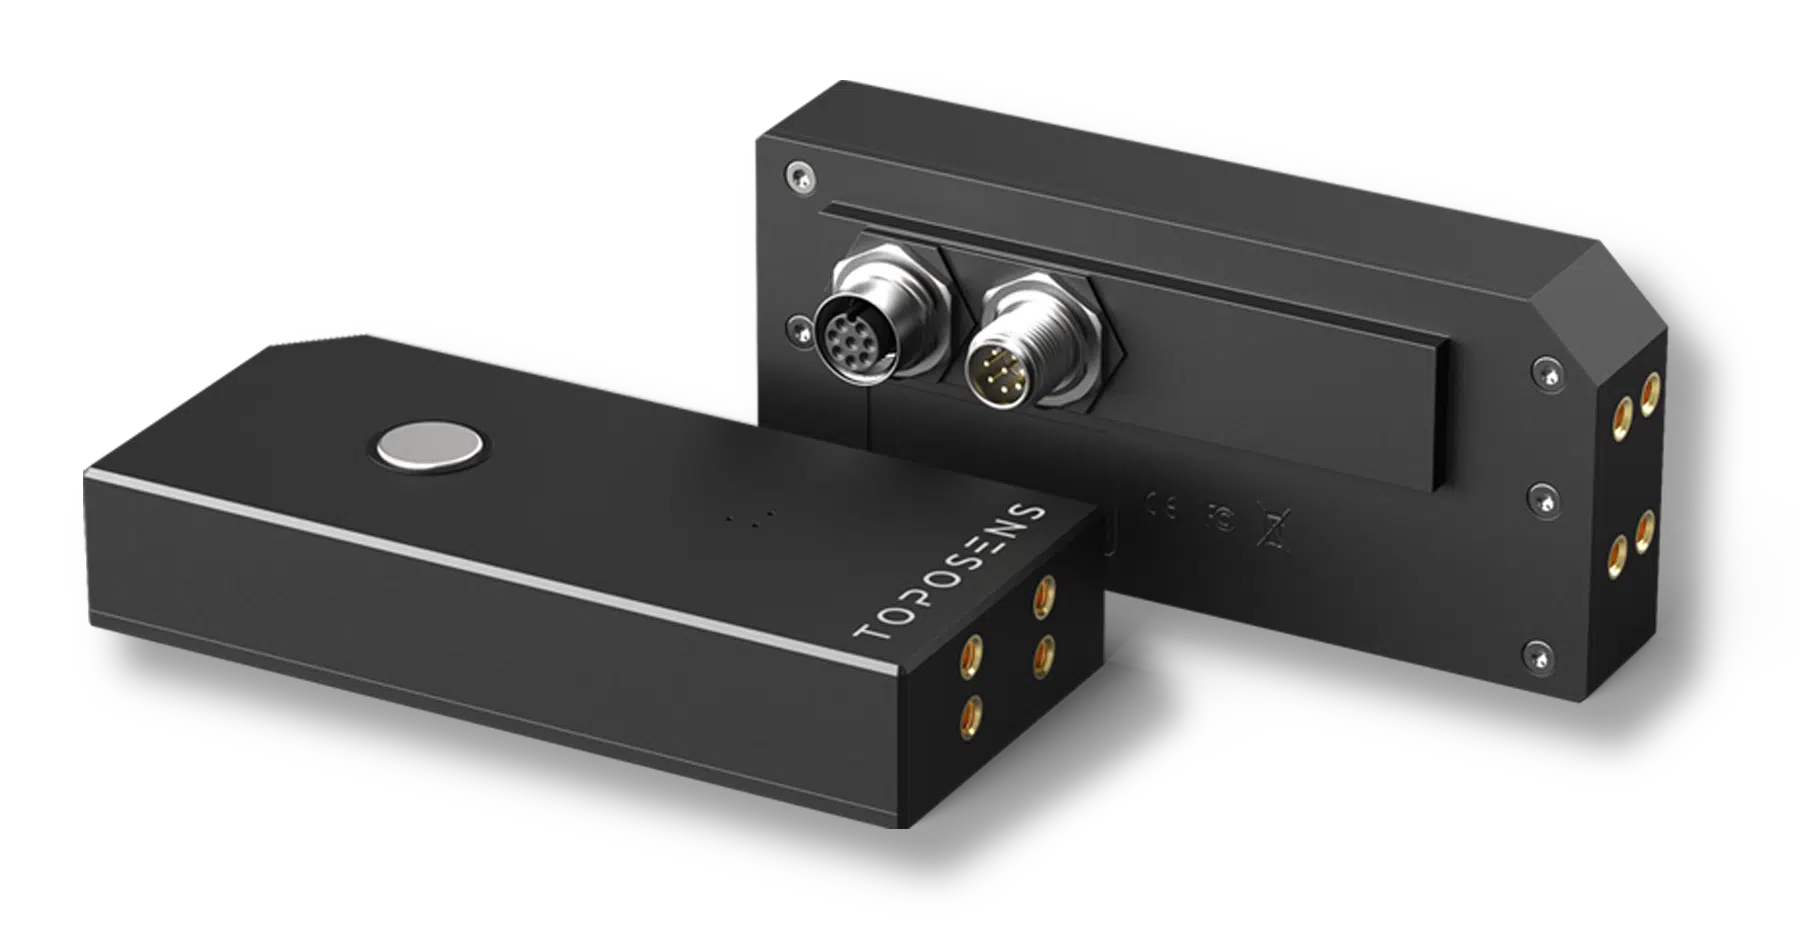 Munich-based high-tech startup Toposens is releasing its 3D Ultrasonic Echolocation Sensor ECHO ONE